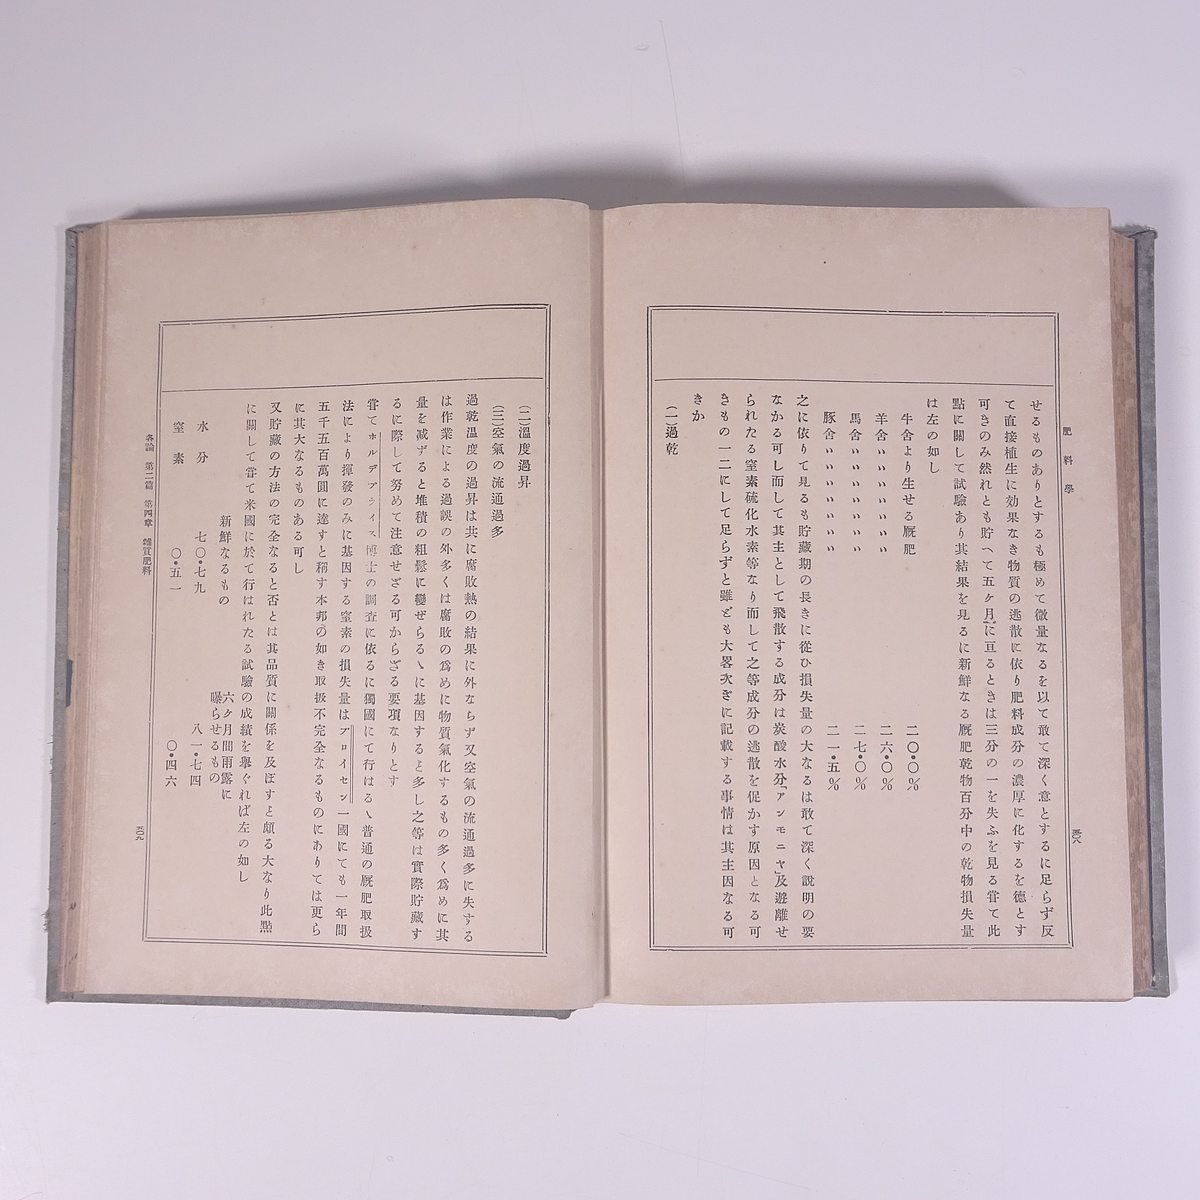  fertilizer . west .. three circle . corporation Meiji three . year 1902 old book separate volume .book@ agriculture agriculture agriculture house 